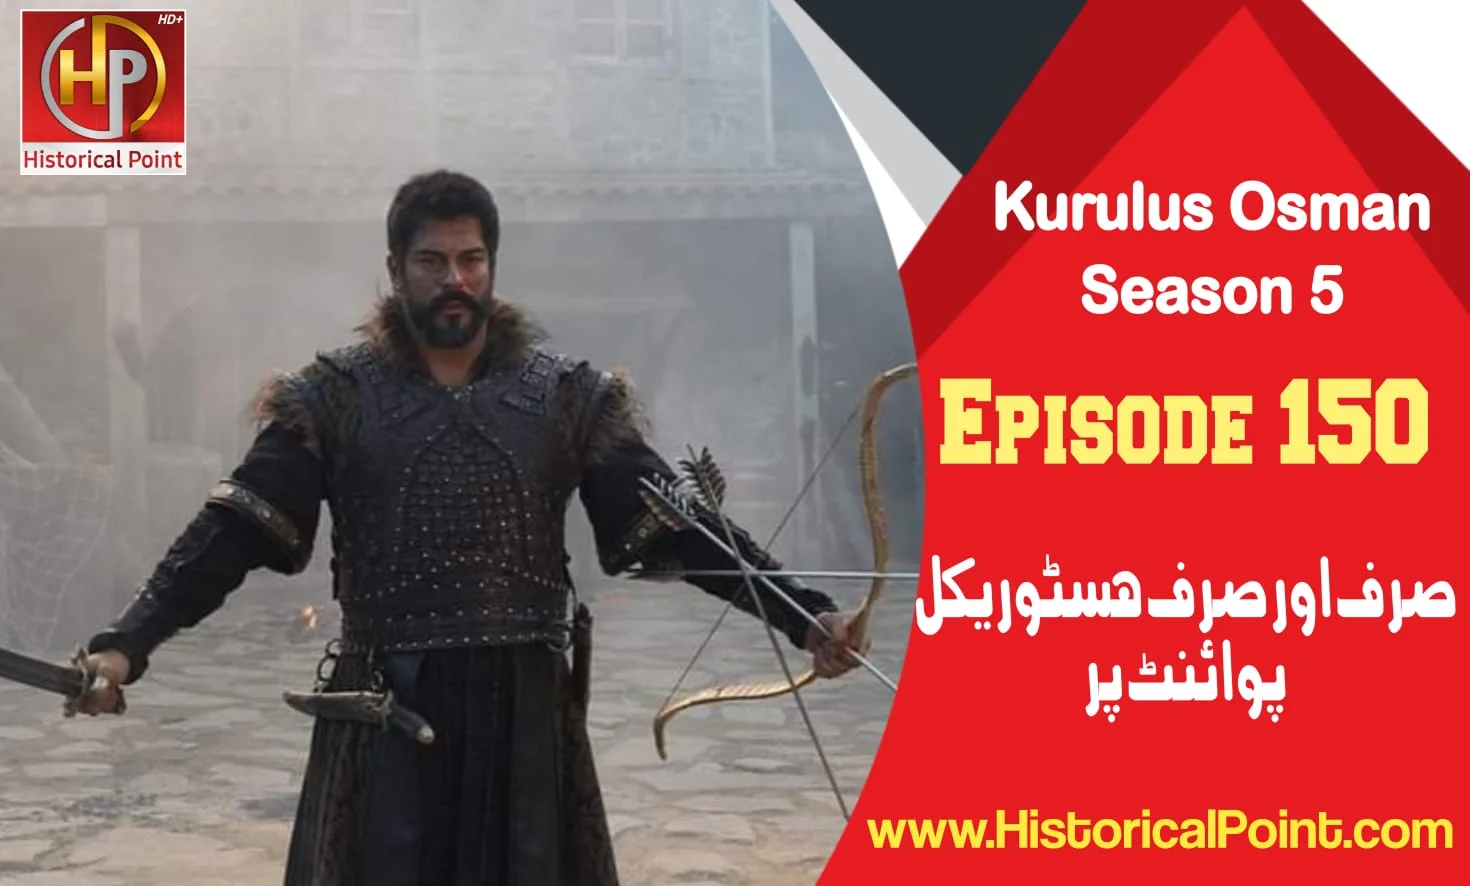 Kurulus Osman Episode 150 in Urdu subtitles